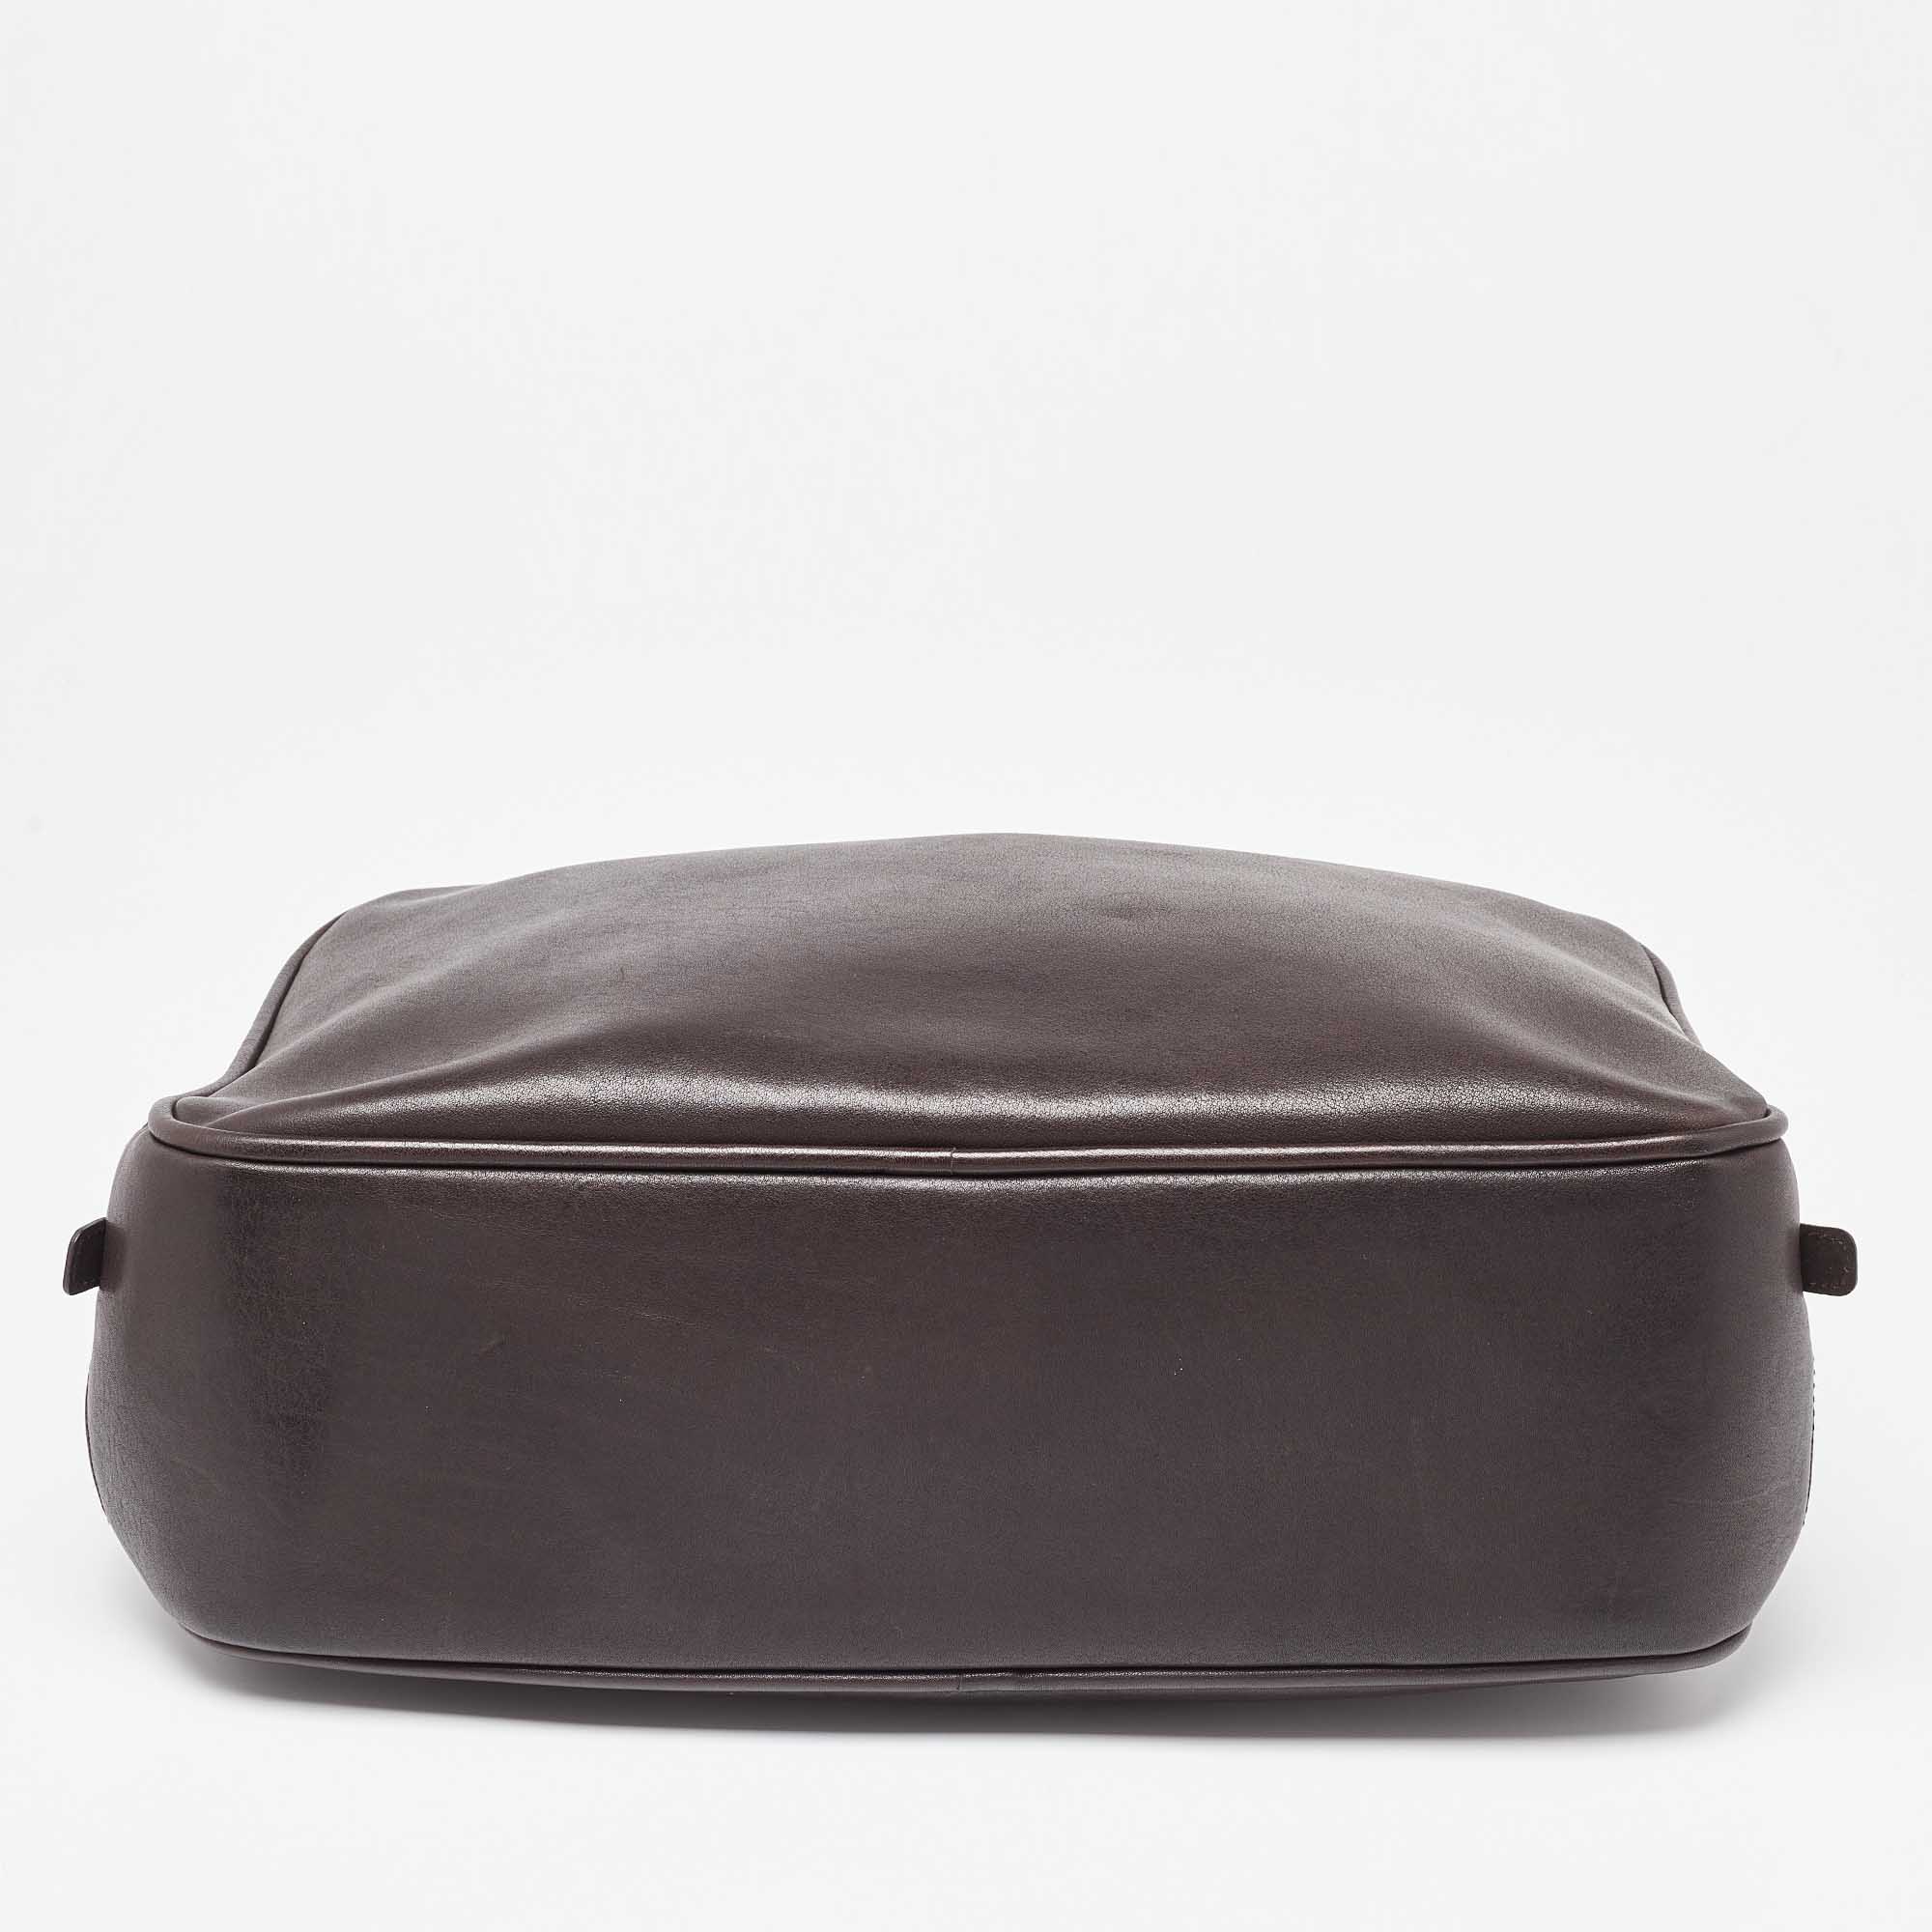 Bottega Veneta Brown Intrecciato Leather Briefcase